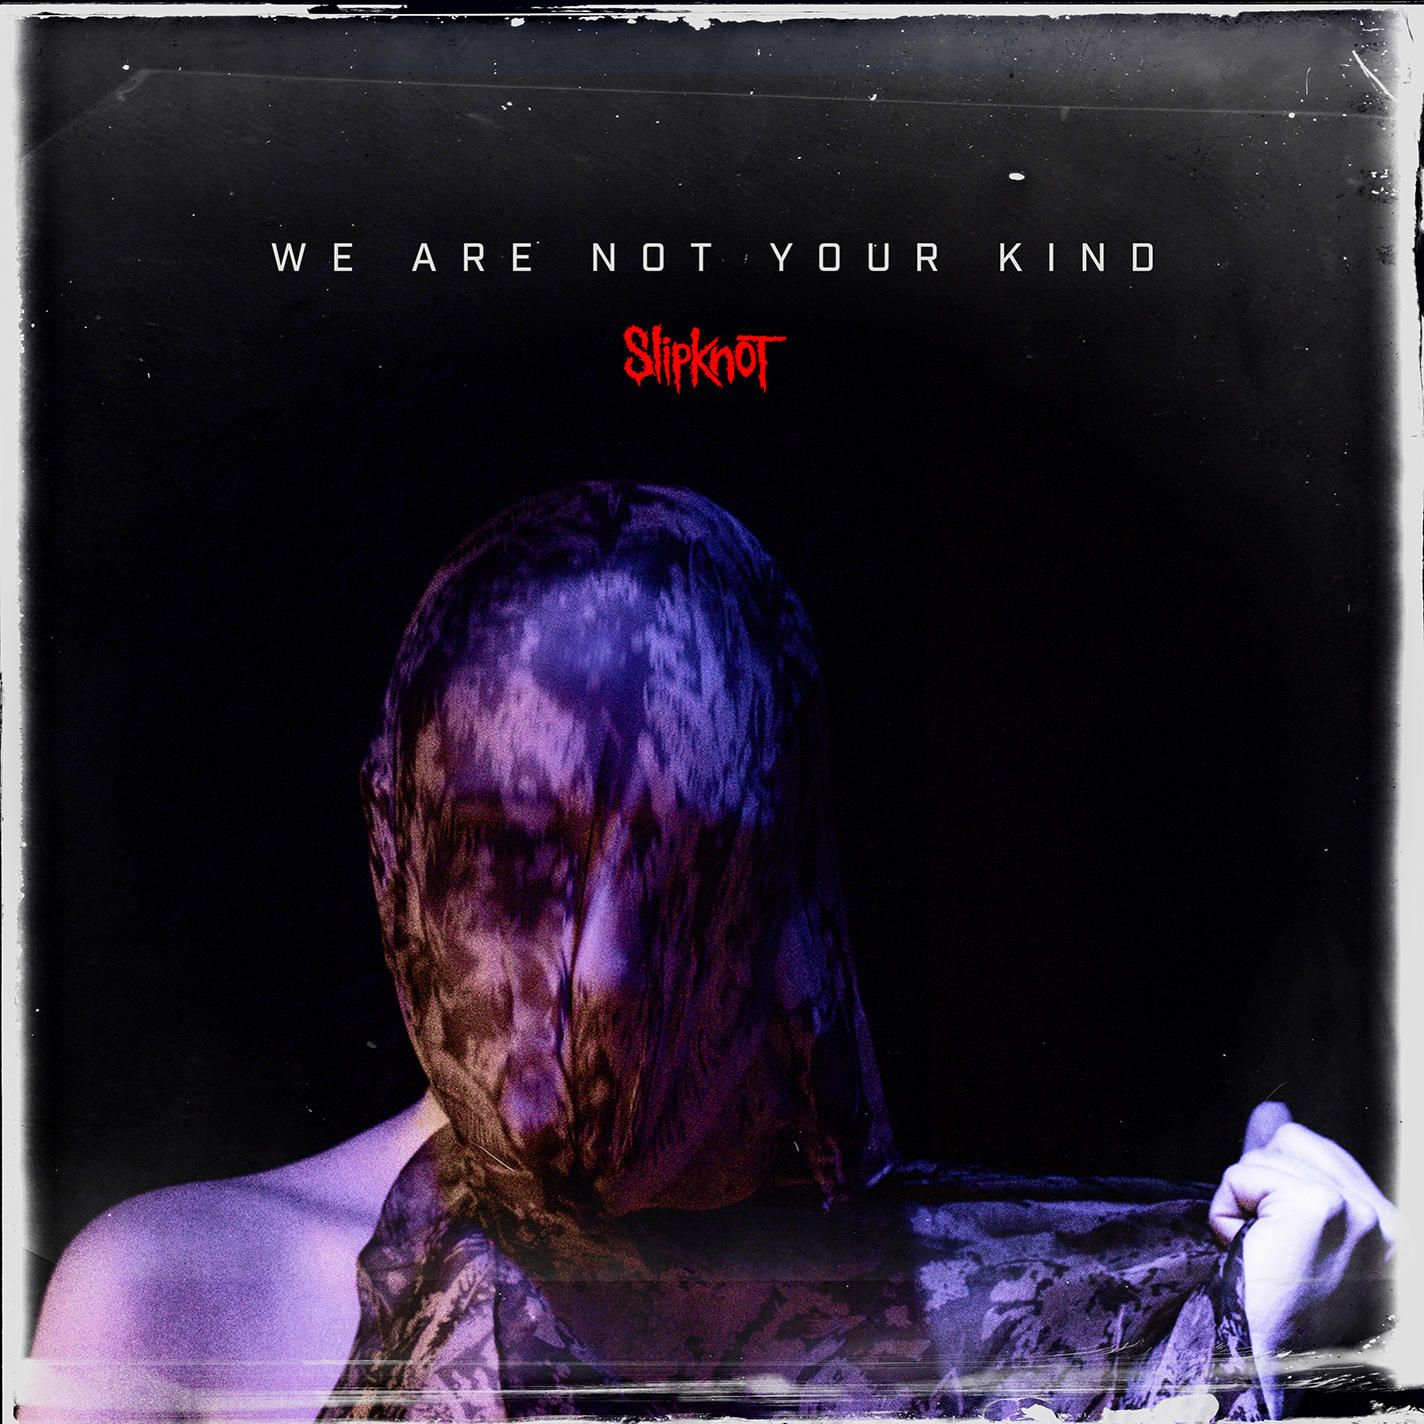 WE - NOT ARE YOUR (Vinyl) - KIND Slipknot (BLUE)